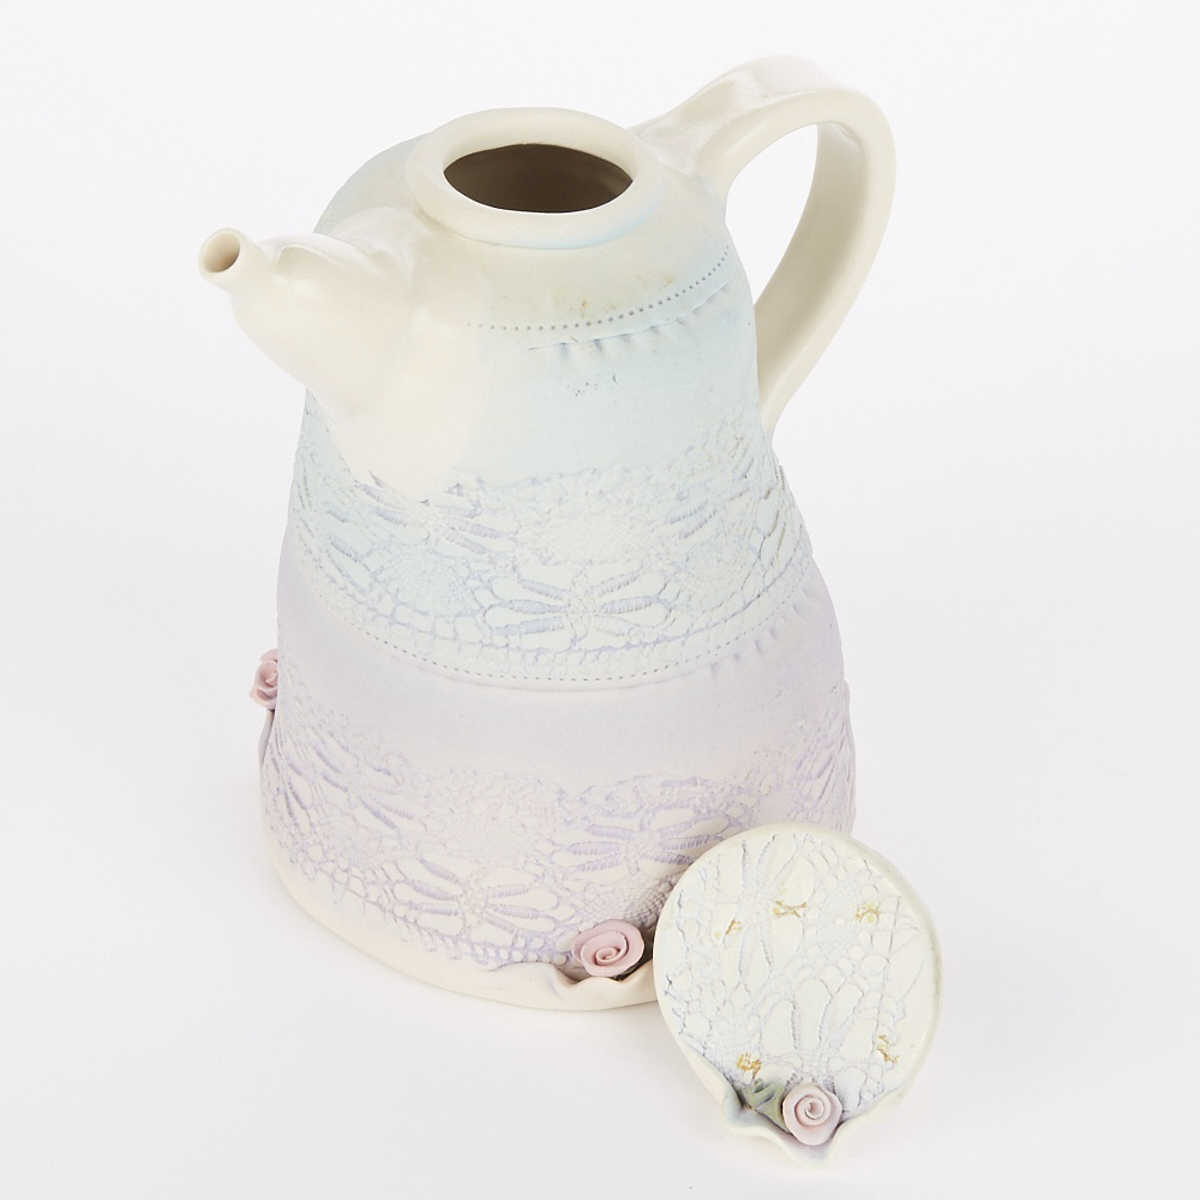 Laura Peery Porcelain Teapot - Image 5 of 6